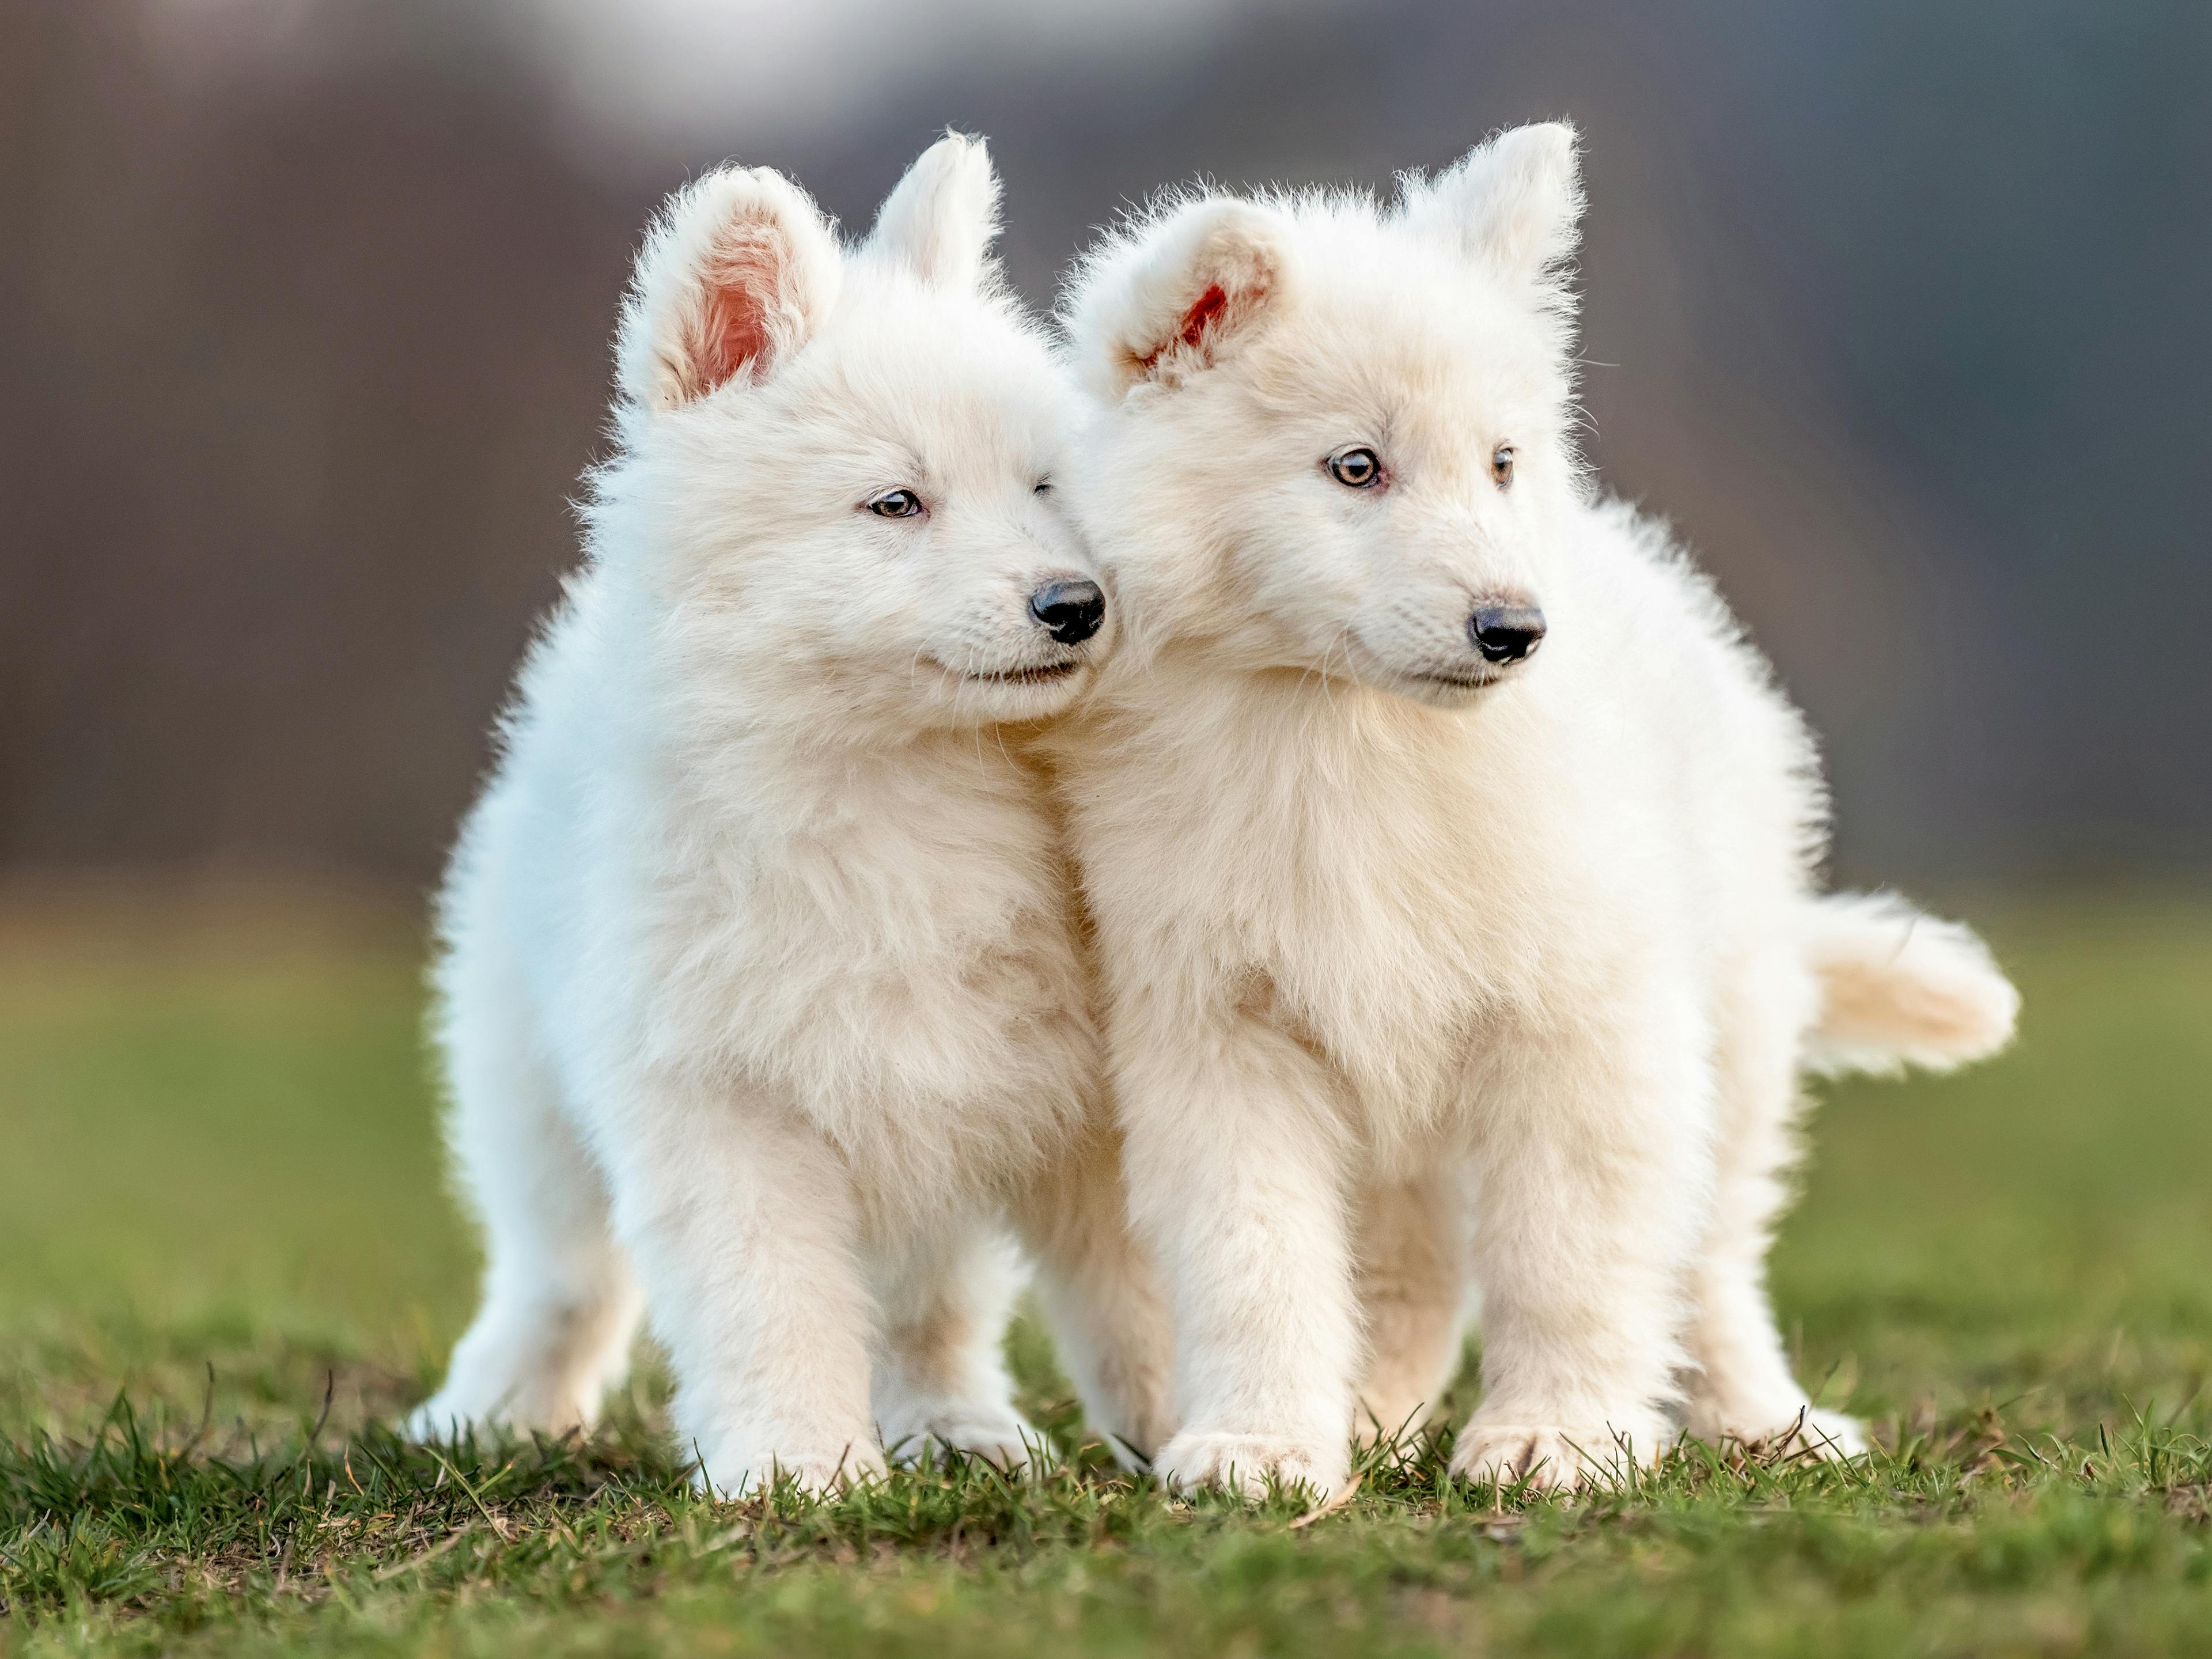 White Swiss Shepherd Dog puppies walking together outside